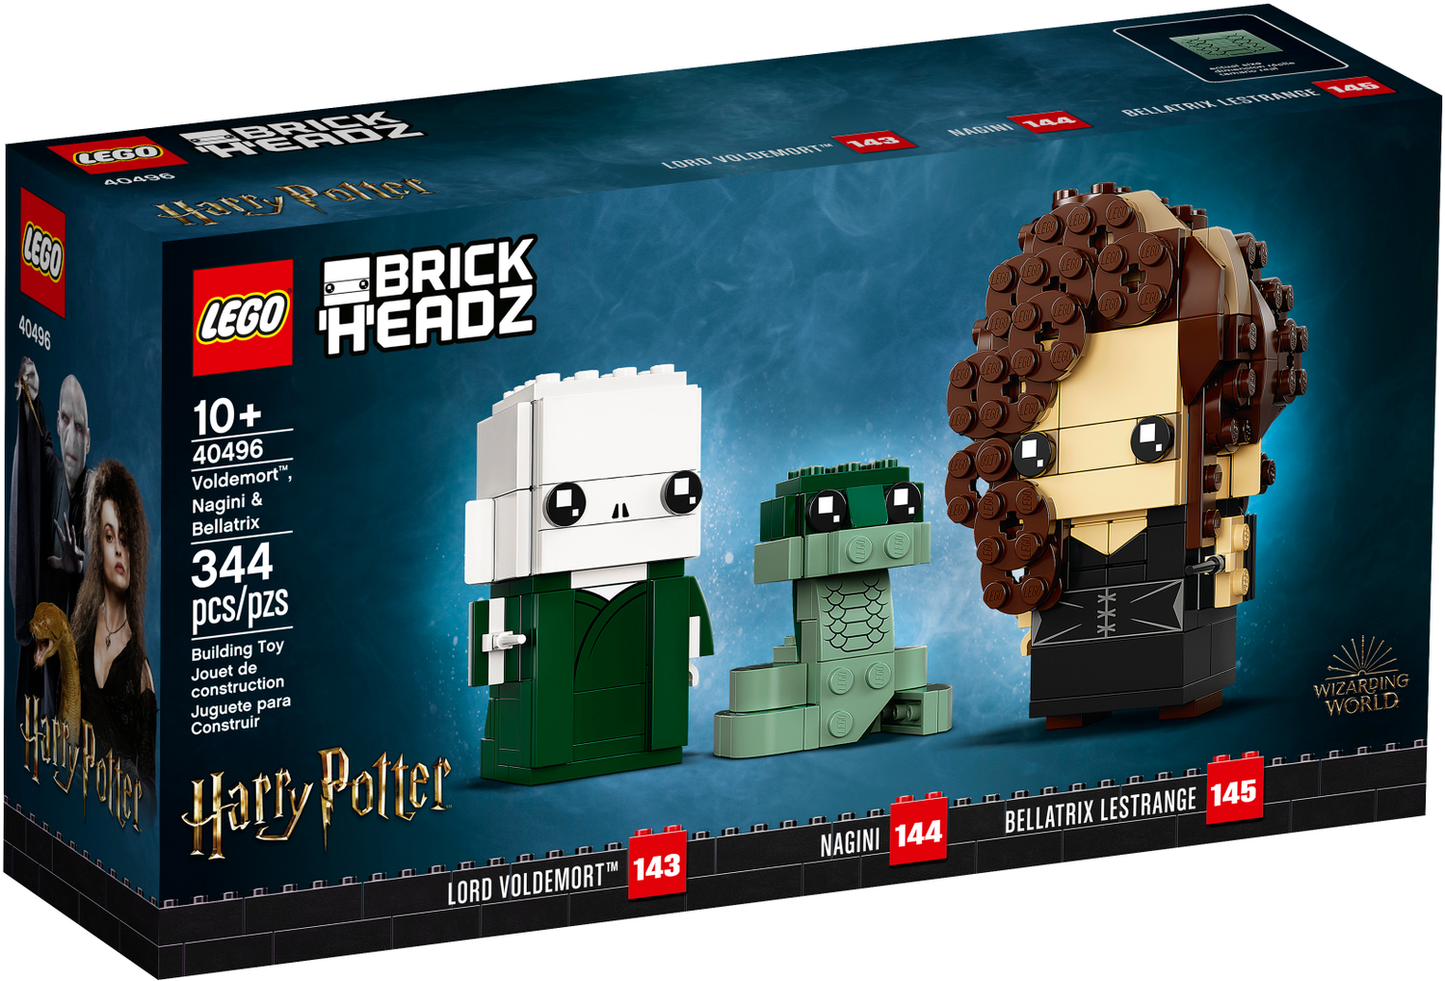 BrickHeadz 40496 Voldemort, Nagini & Bellatrix